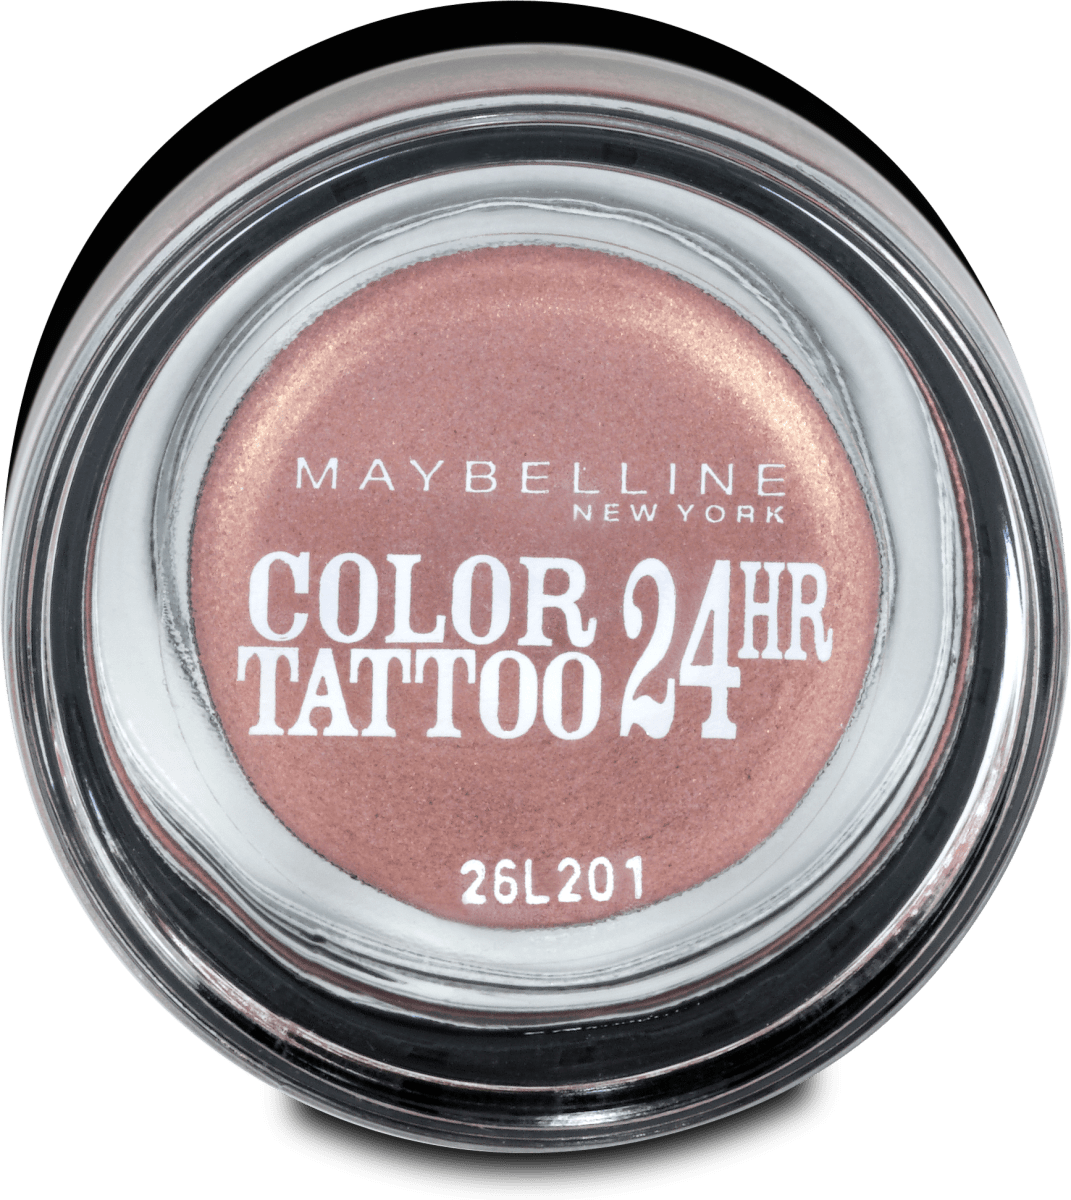 Maybelline New York Lidschatten 35 Color ml Gold, Tattoo Pink 65 24hr